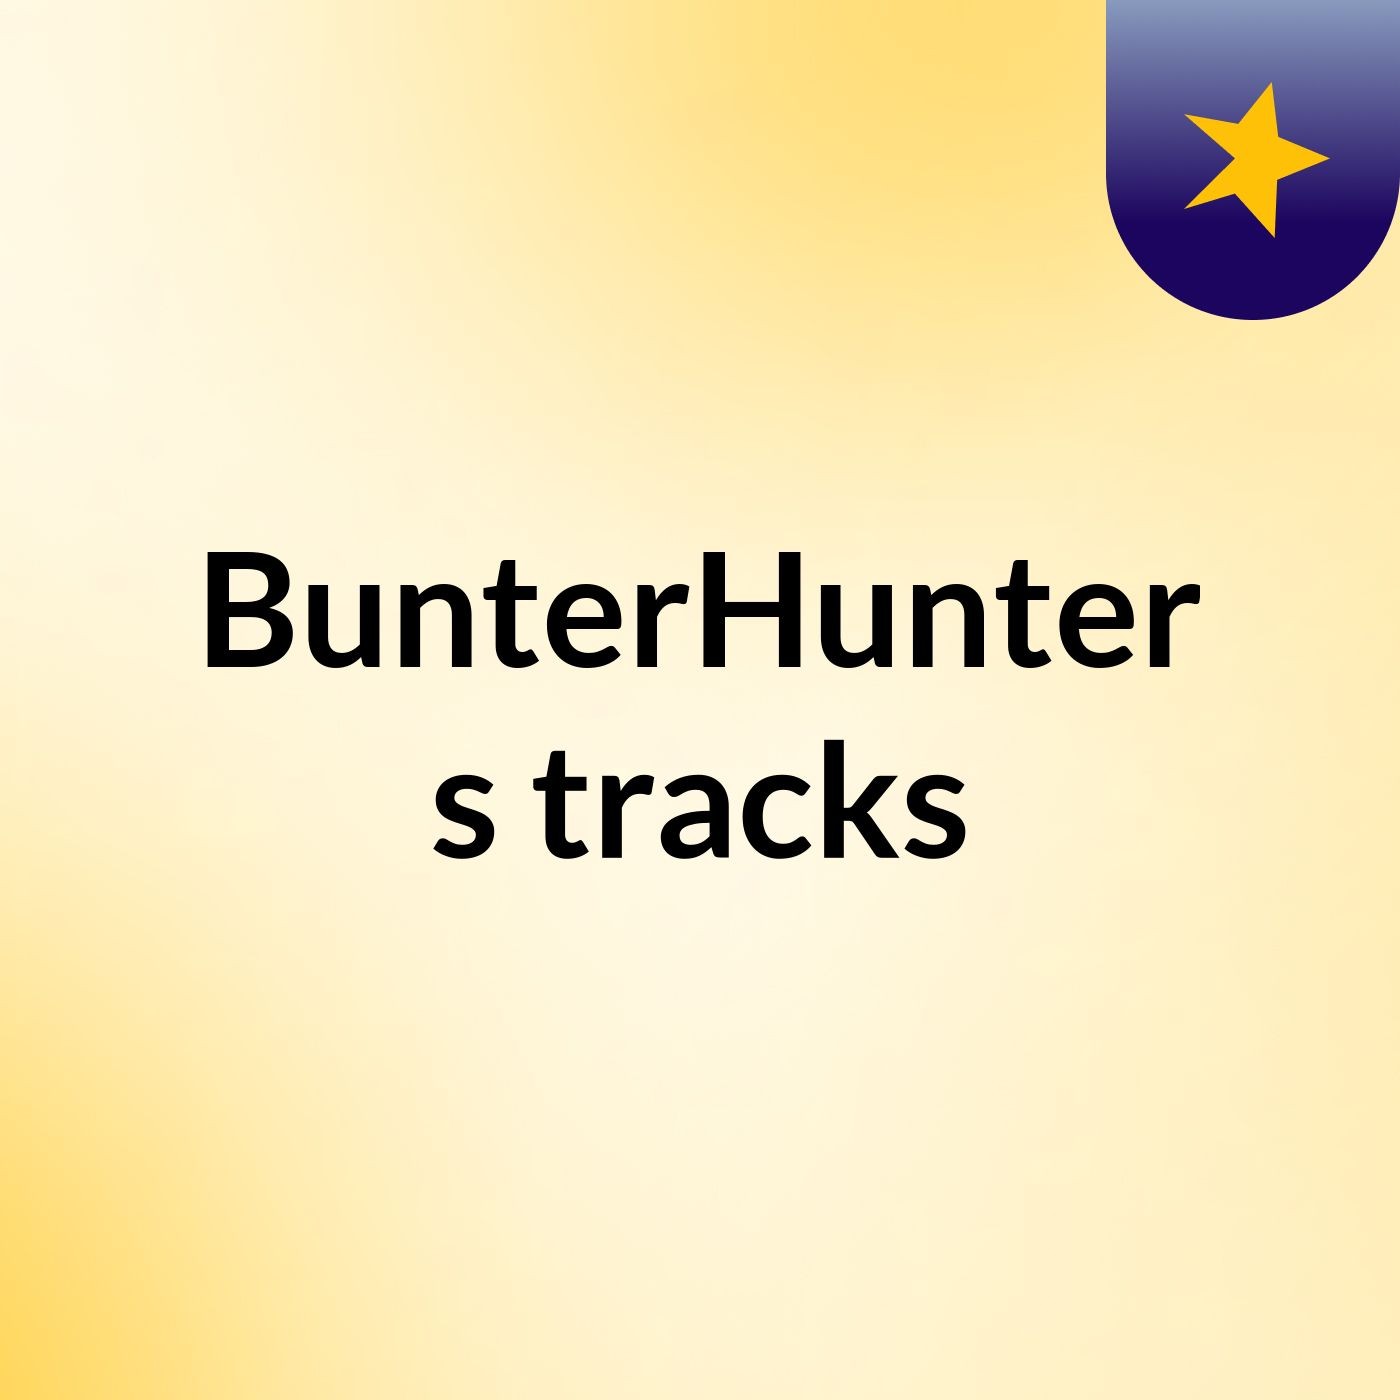 BunterHunter's tracks